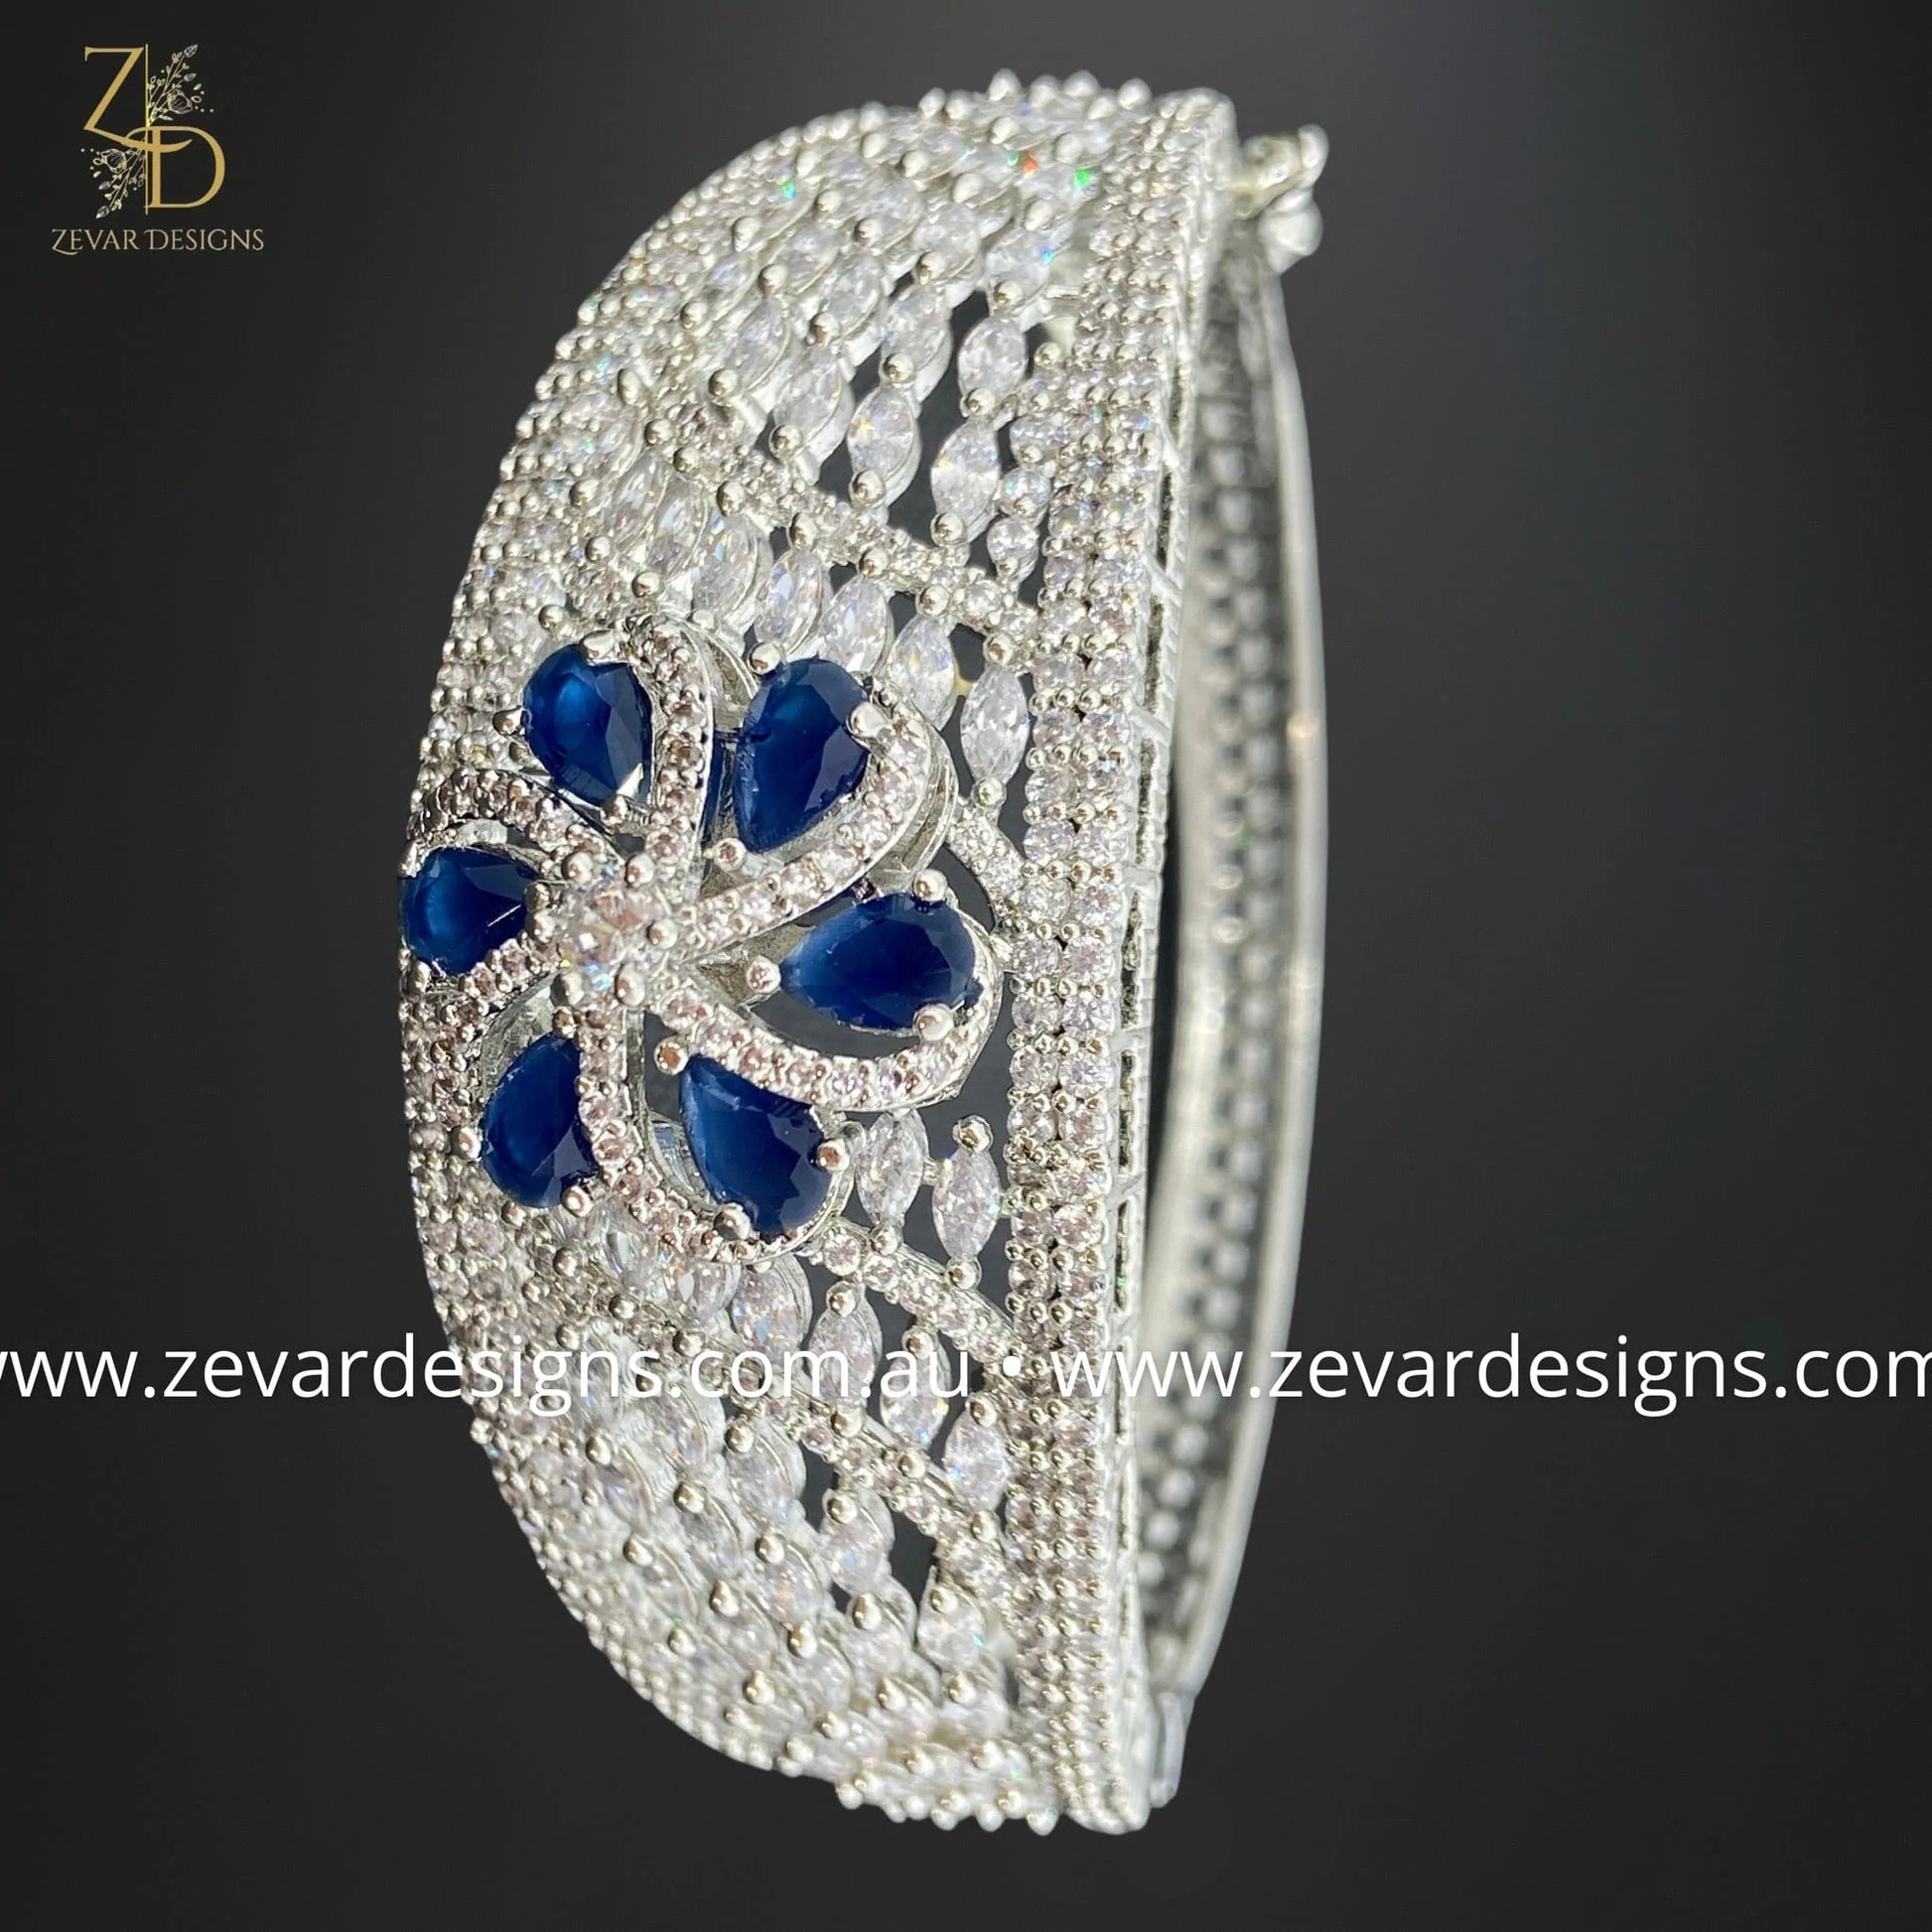 Zevar Designs Bangles & Bracelets - AD AD Bracelet in White Rhodium and Sapphire Blue